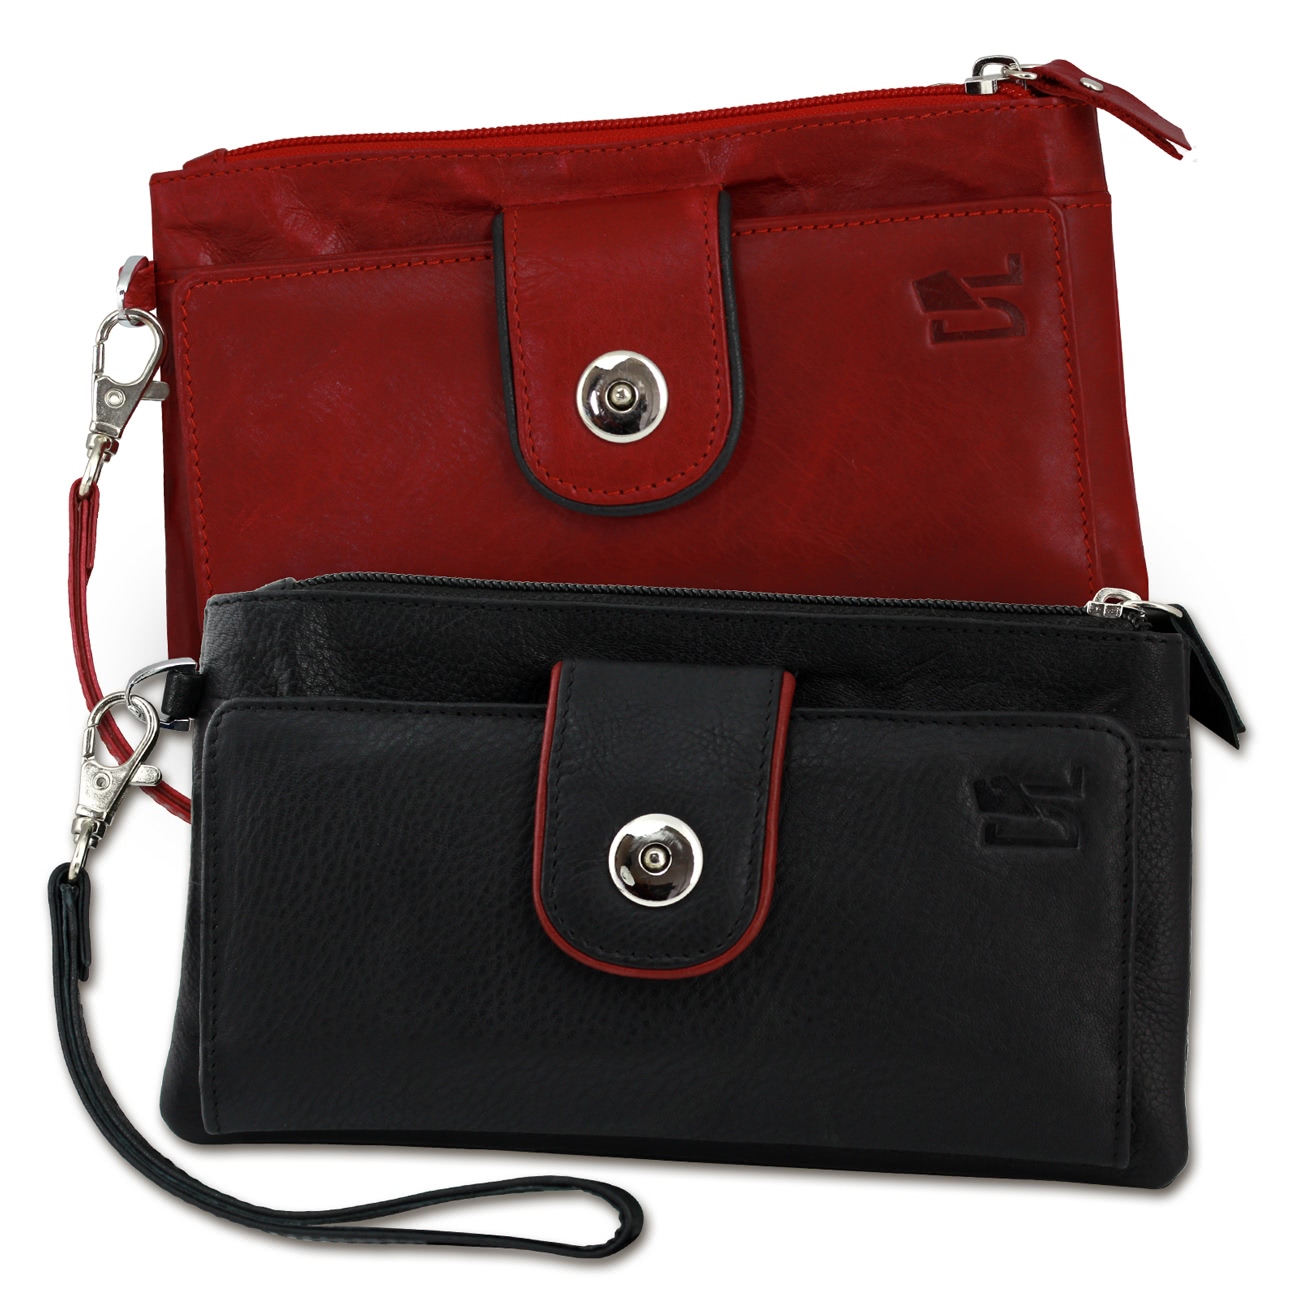 Purse XXL Cell phone case Clutch Leather 3in1 Wrist bag Wristlet OTZ500X | eBay